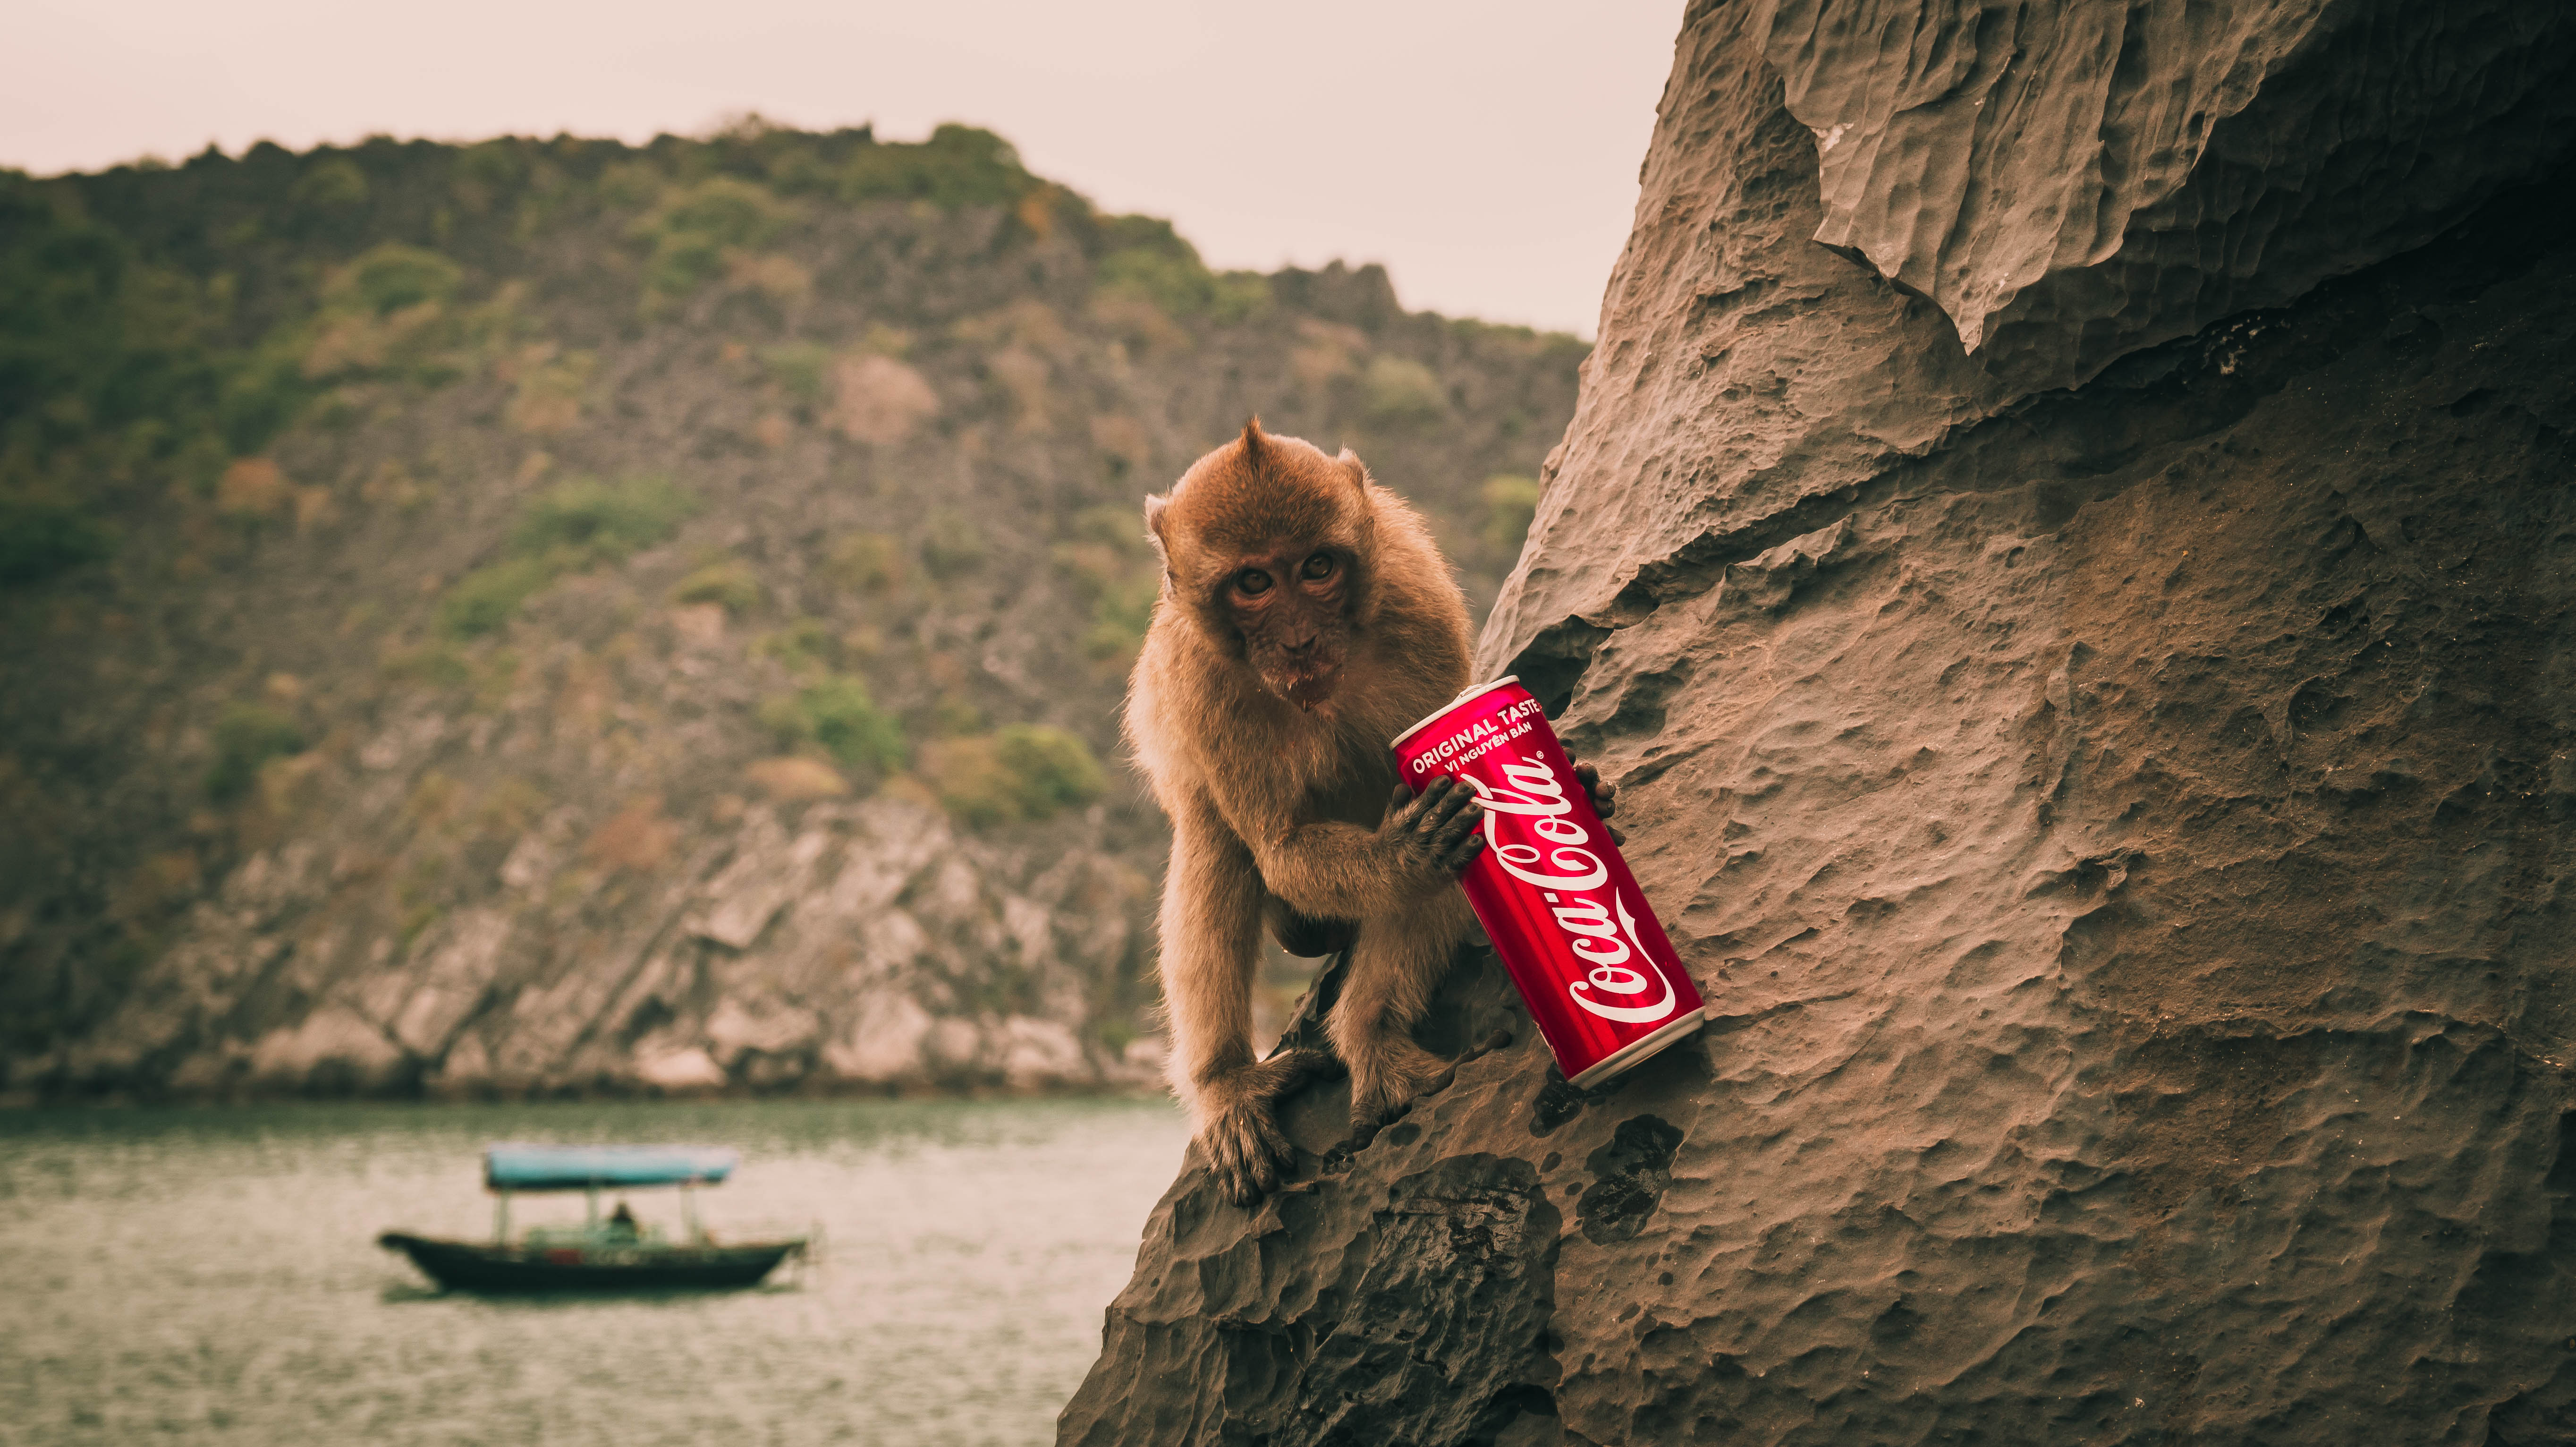 Monkey Coca Cola Island Boat Can Digital Art Photo Manipulation Animals 5456x3064